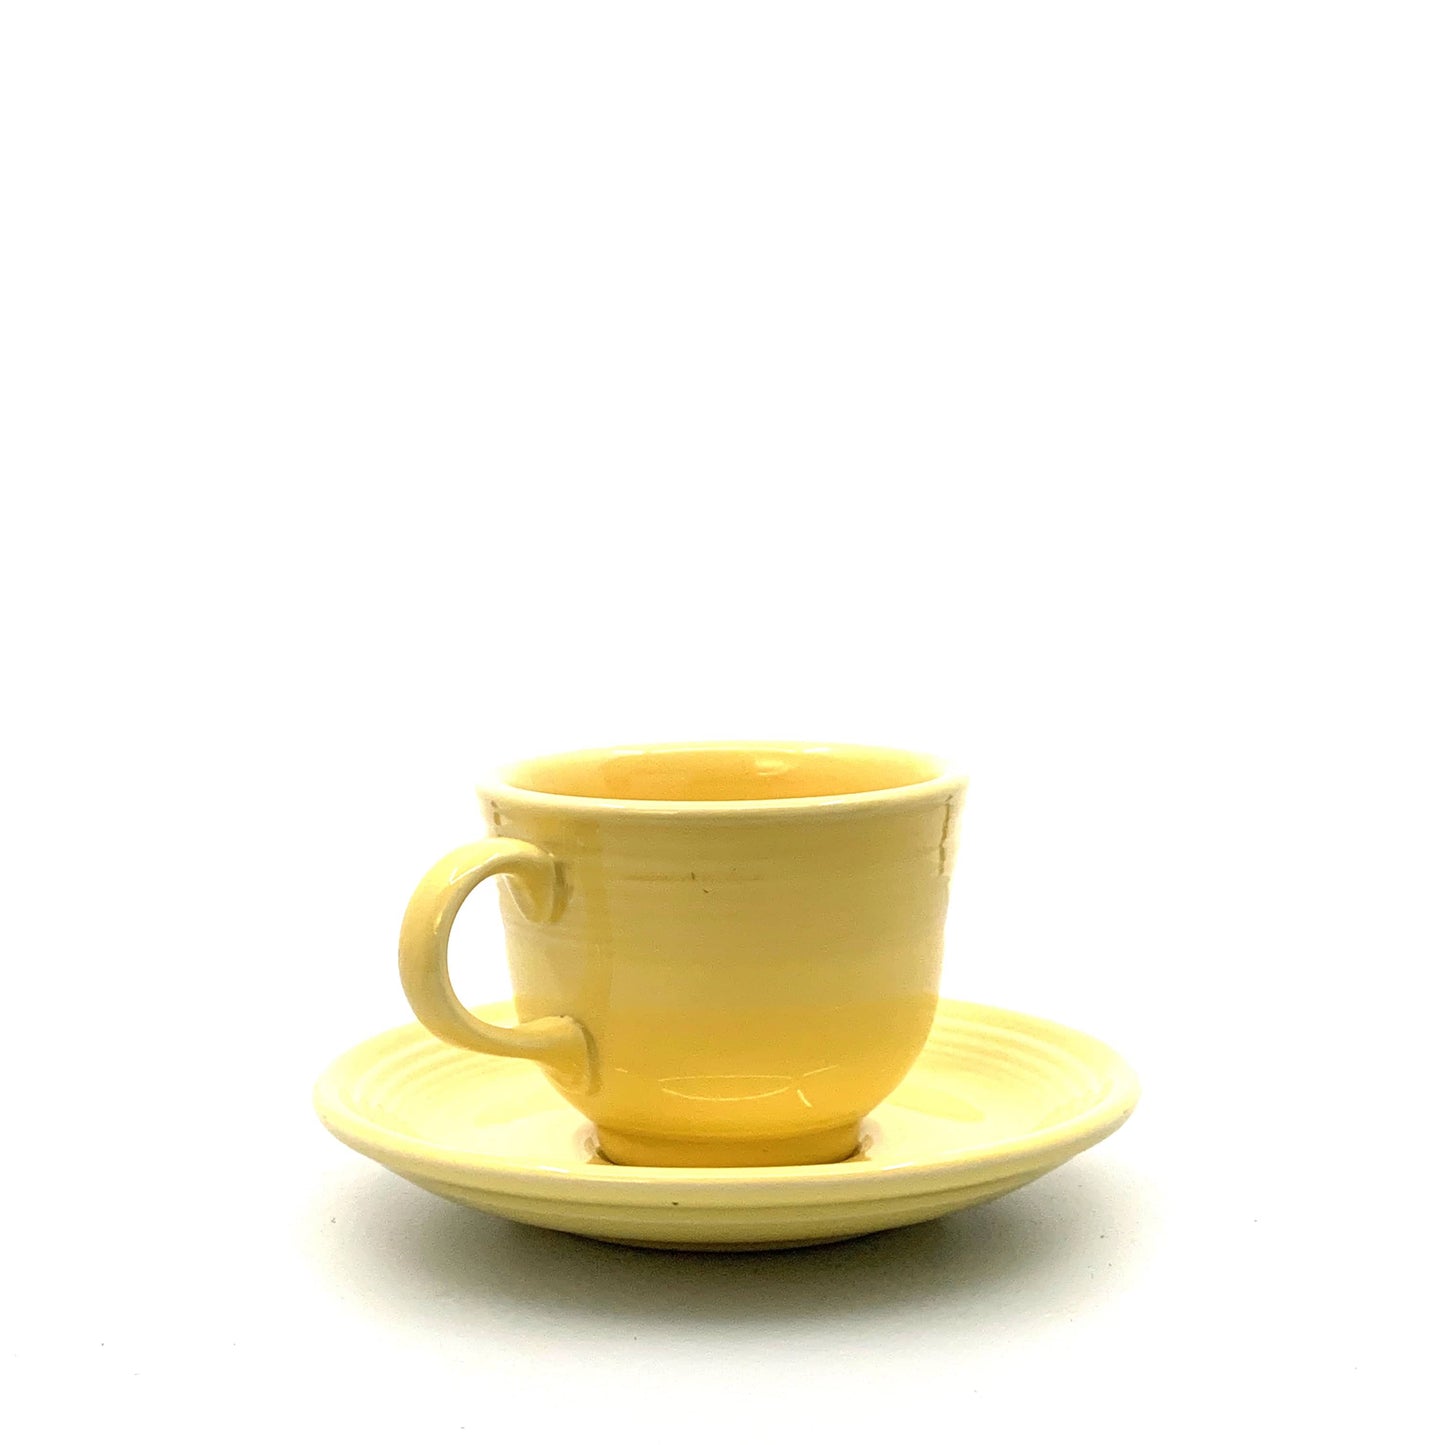 Fiesta Banana Yellow Replacement Tea Coffee Cup and Saucer Set 7.75 Fl Oz Homer Laughlin Co USA.